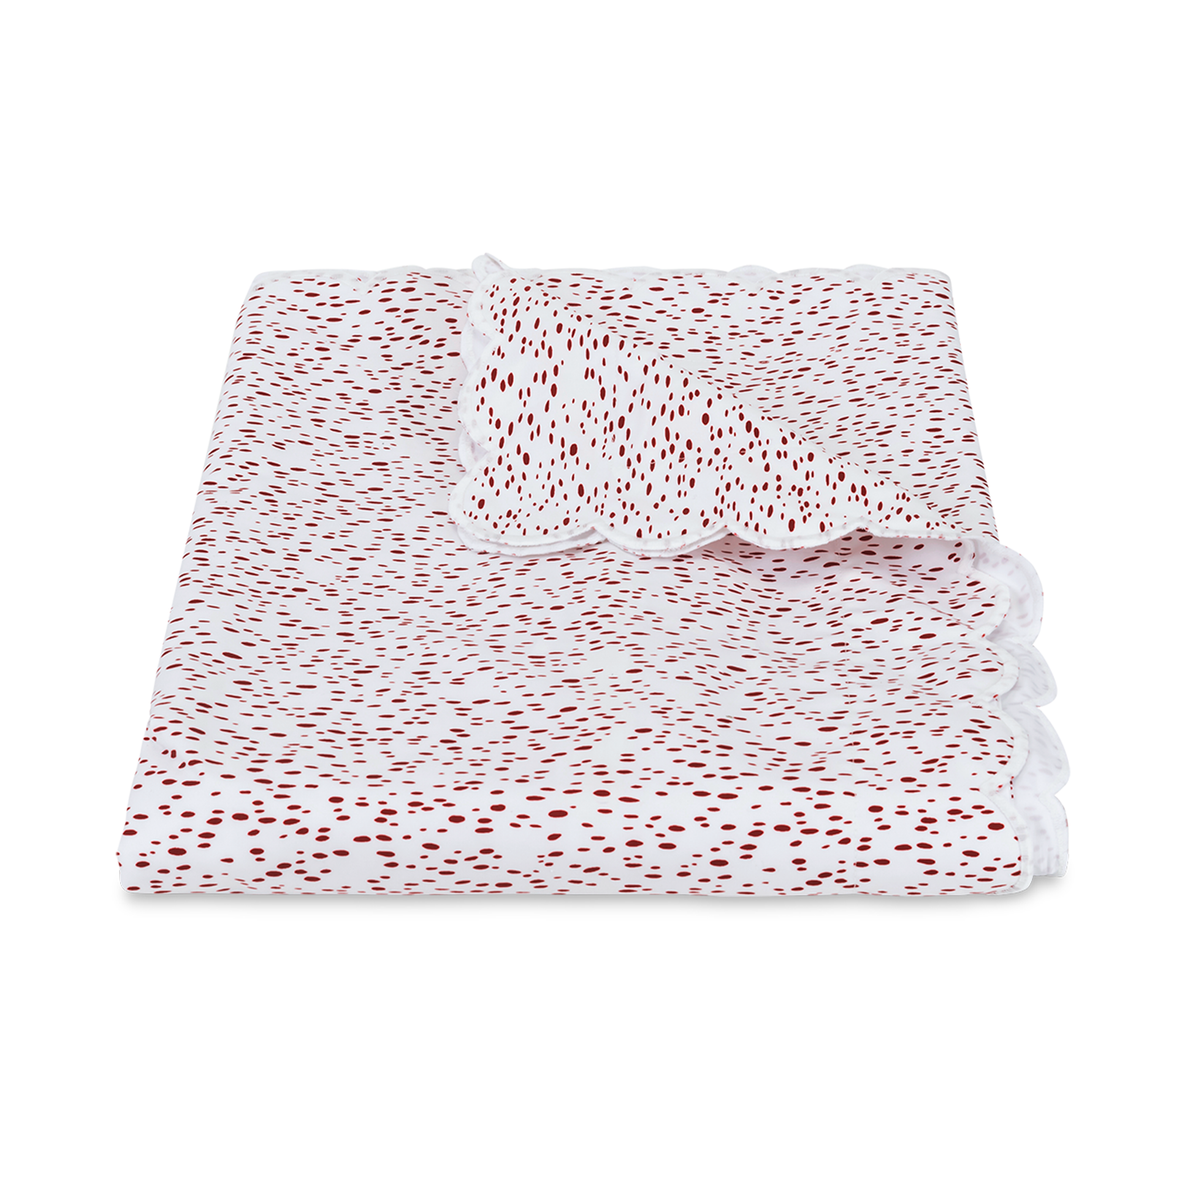 Duvet Cover of Matouk Celine Bedding in Redberry Color